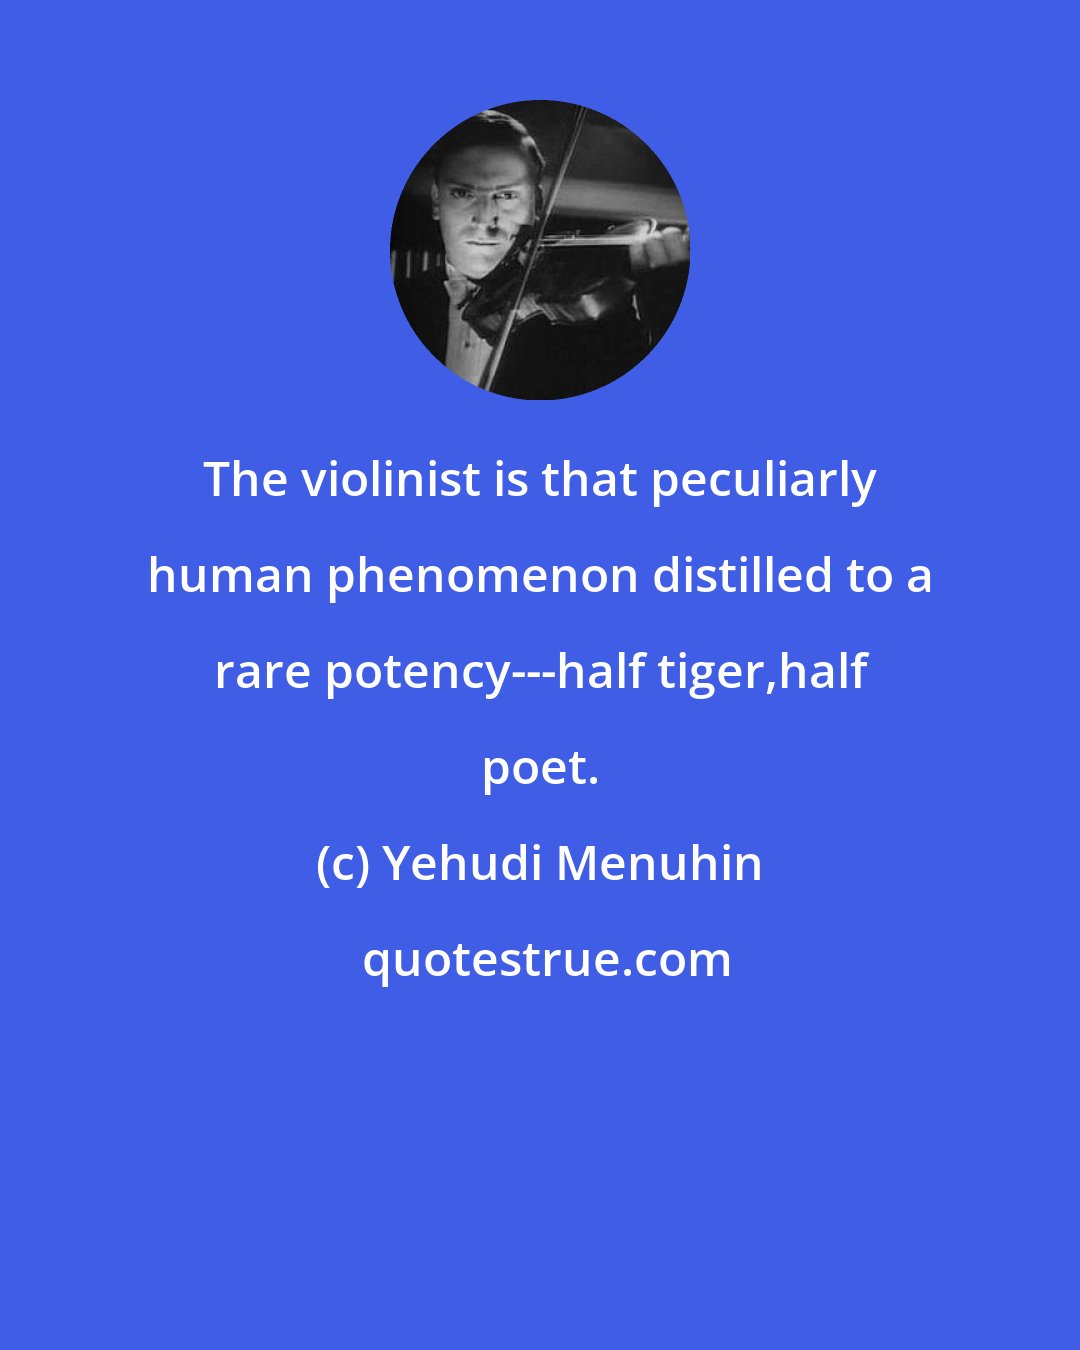 Yehudi Menuhin: The violinist is that peculiarly human phenomenon distilled to a rare potency---half tiger,half poet.